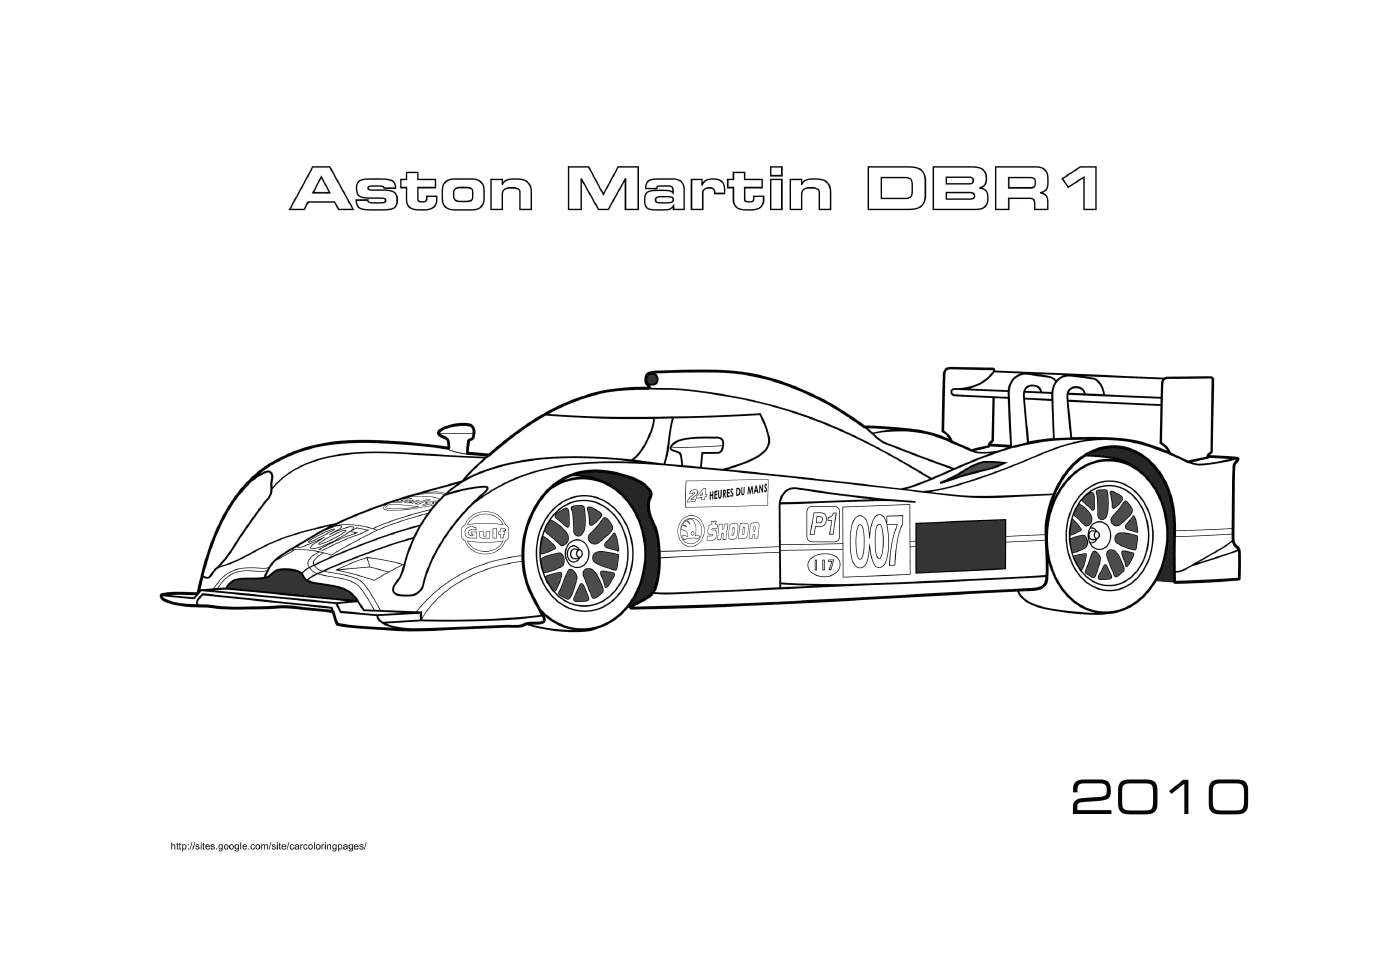   Aston Martin DBR1 2010, voiture de Formule 1 